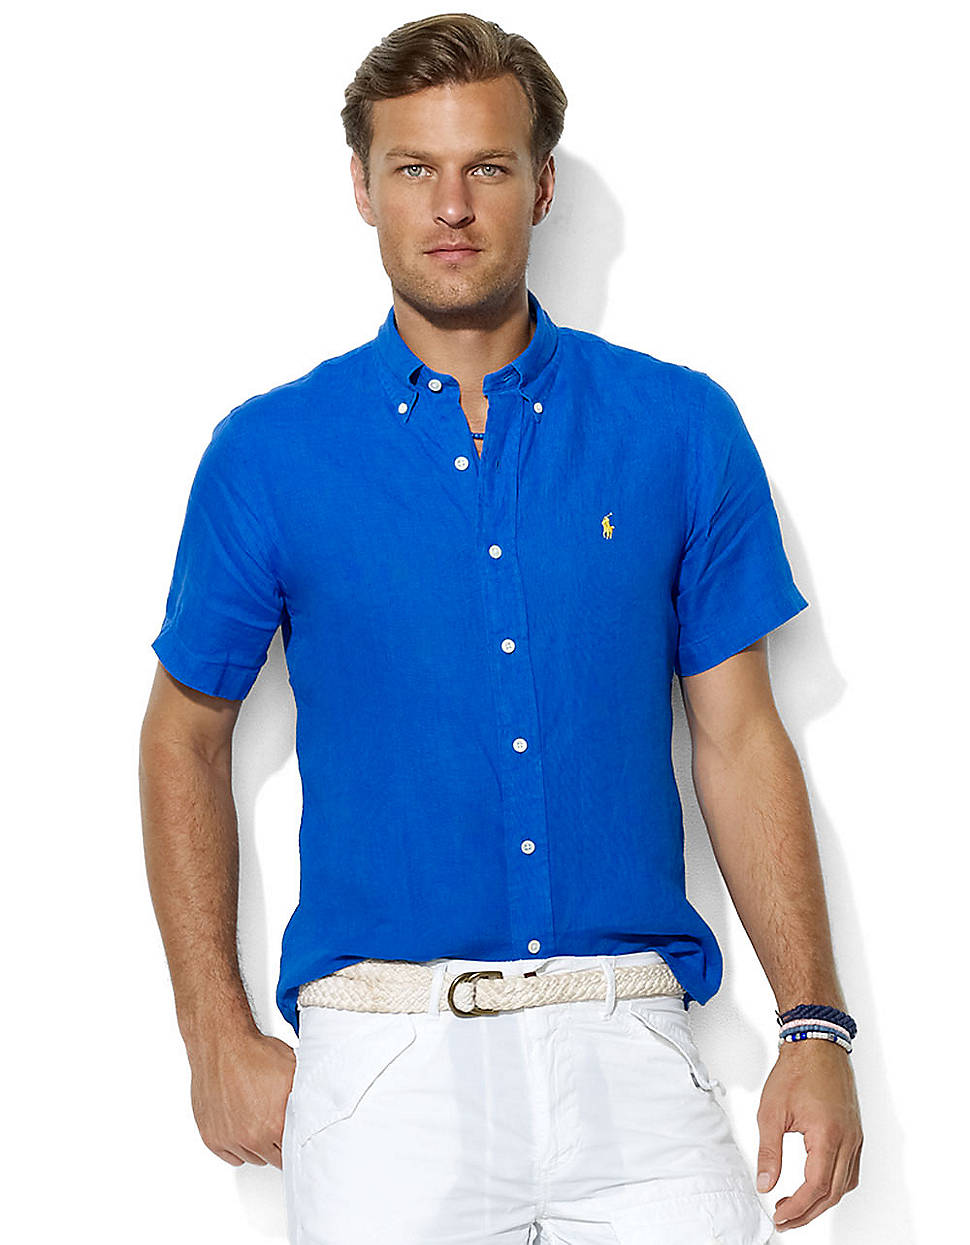 Lyst - Polo ralph lauren Custom Fit Short Sleeved Linen Shirt in Blue ...